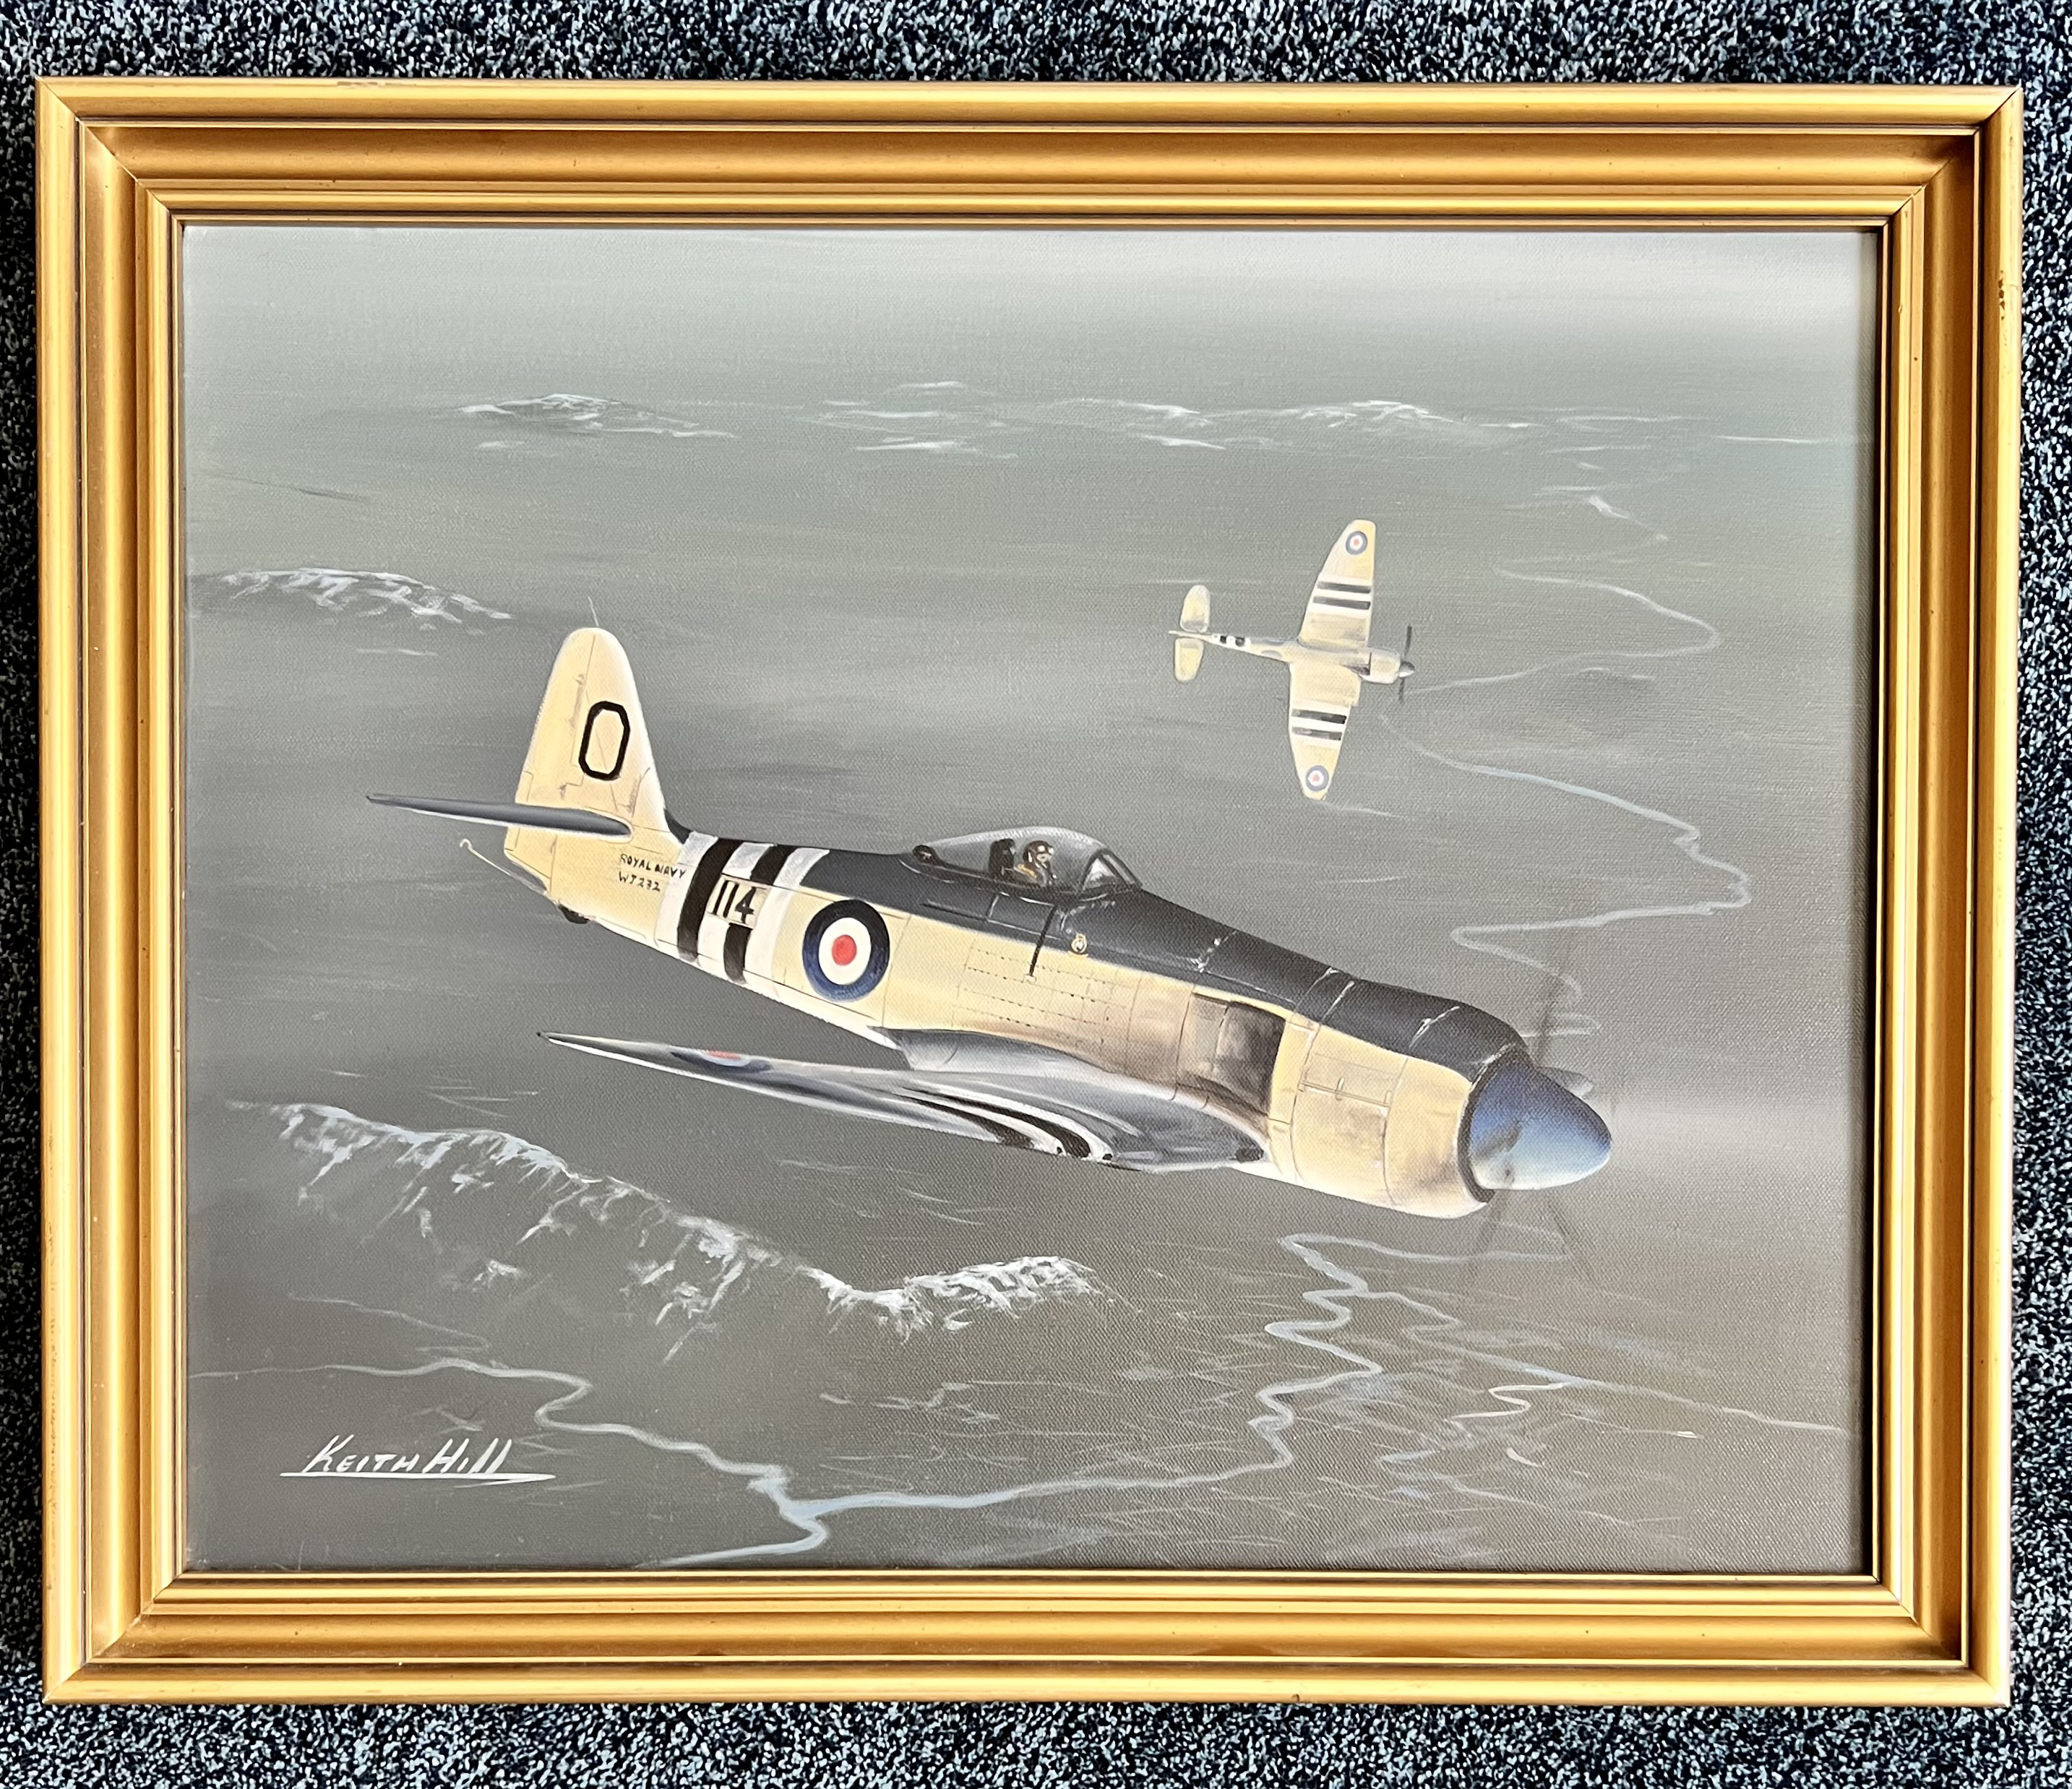 ea Fury Over Korea. Original Aviation Art Work By Aviation Artist Keith Hall